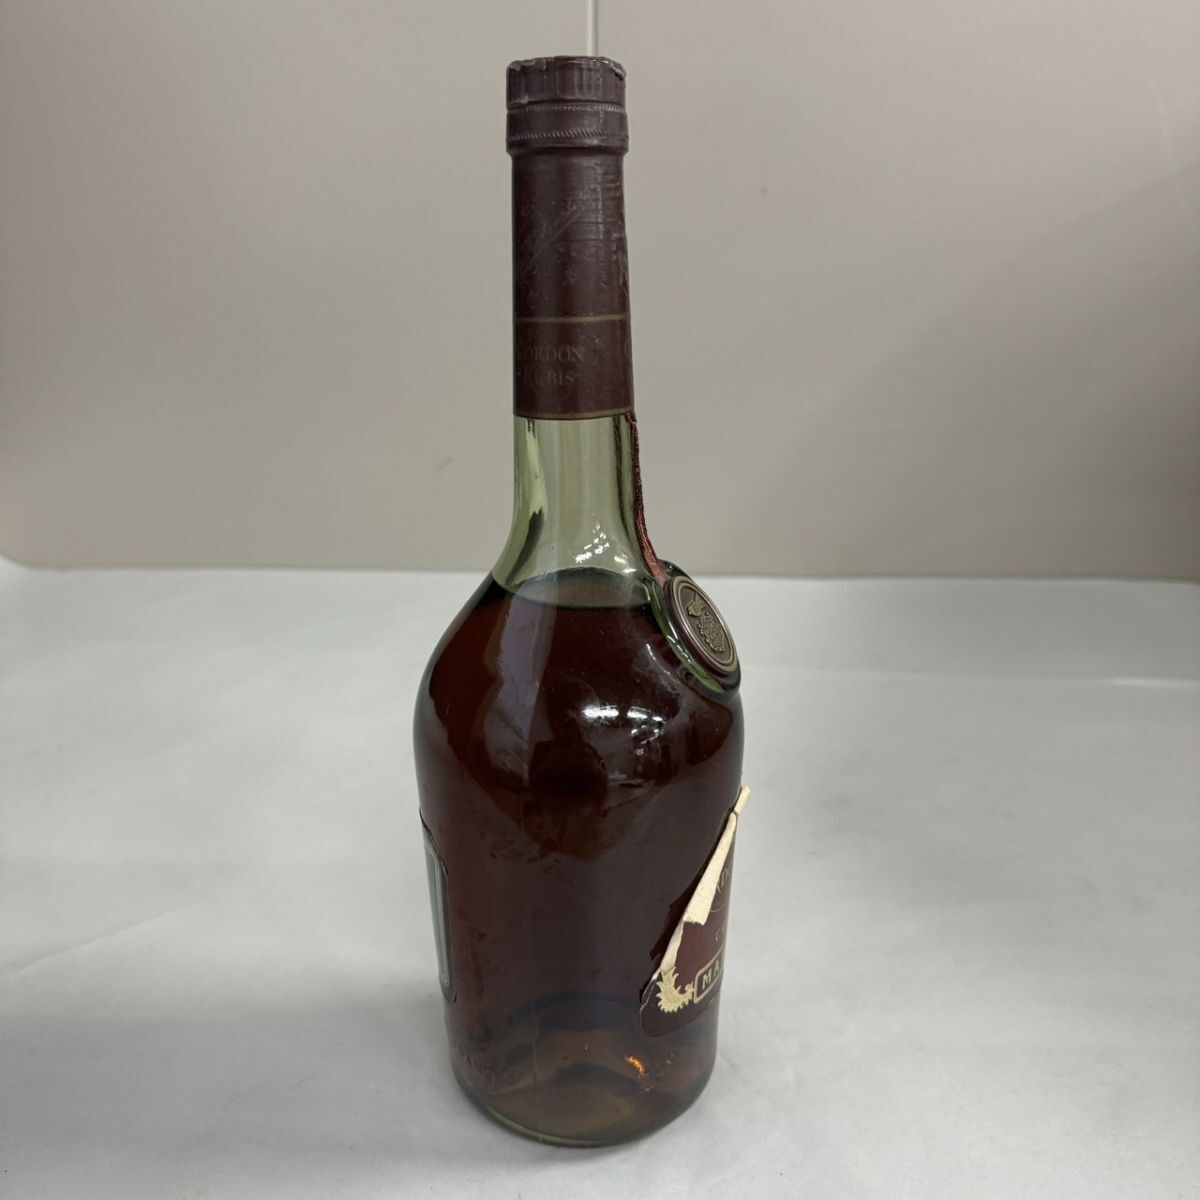 B35002(042)-129/YK9000 [ Chiba ] sake MARTELL CORDON RUBIS COGNAC Martell koru Don ruby cognac 700ml